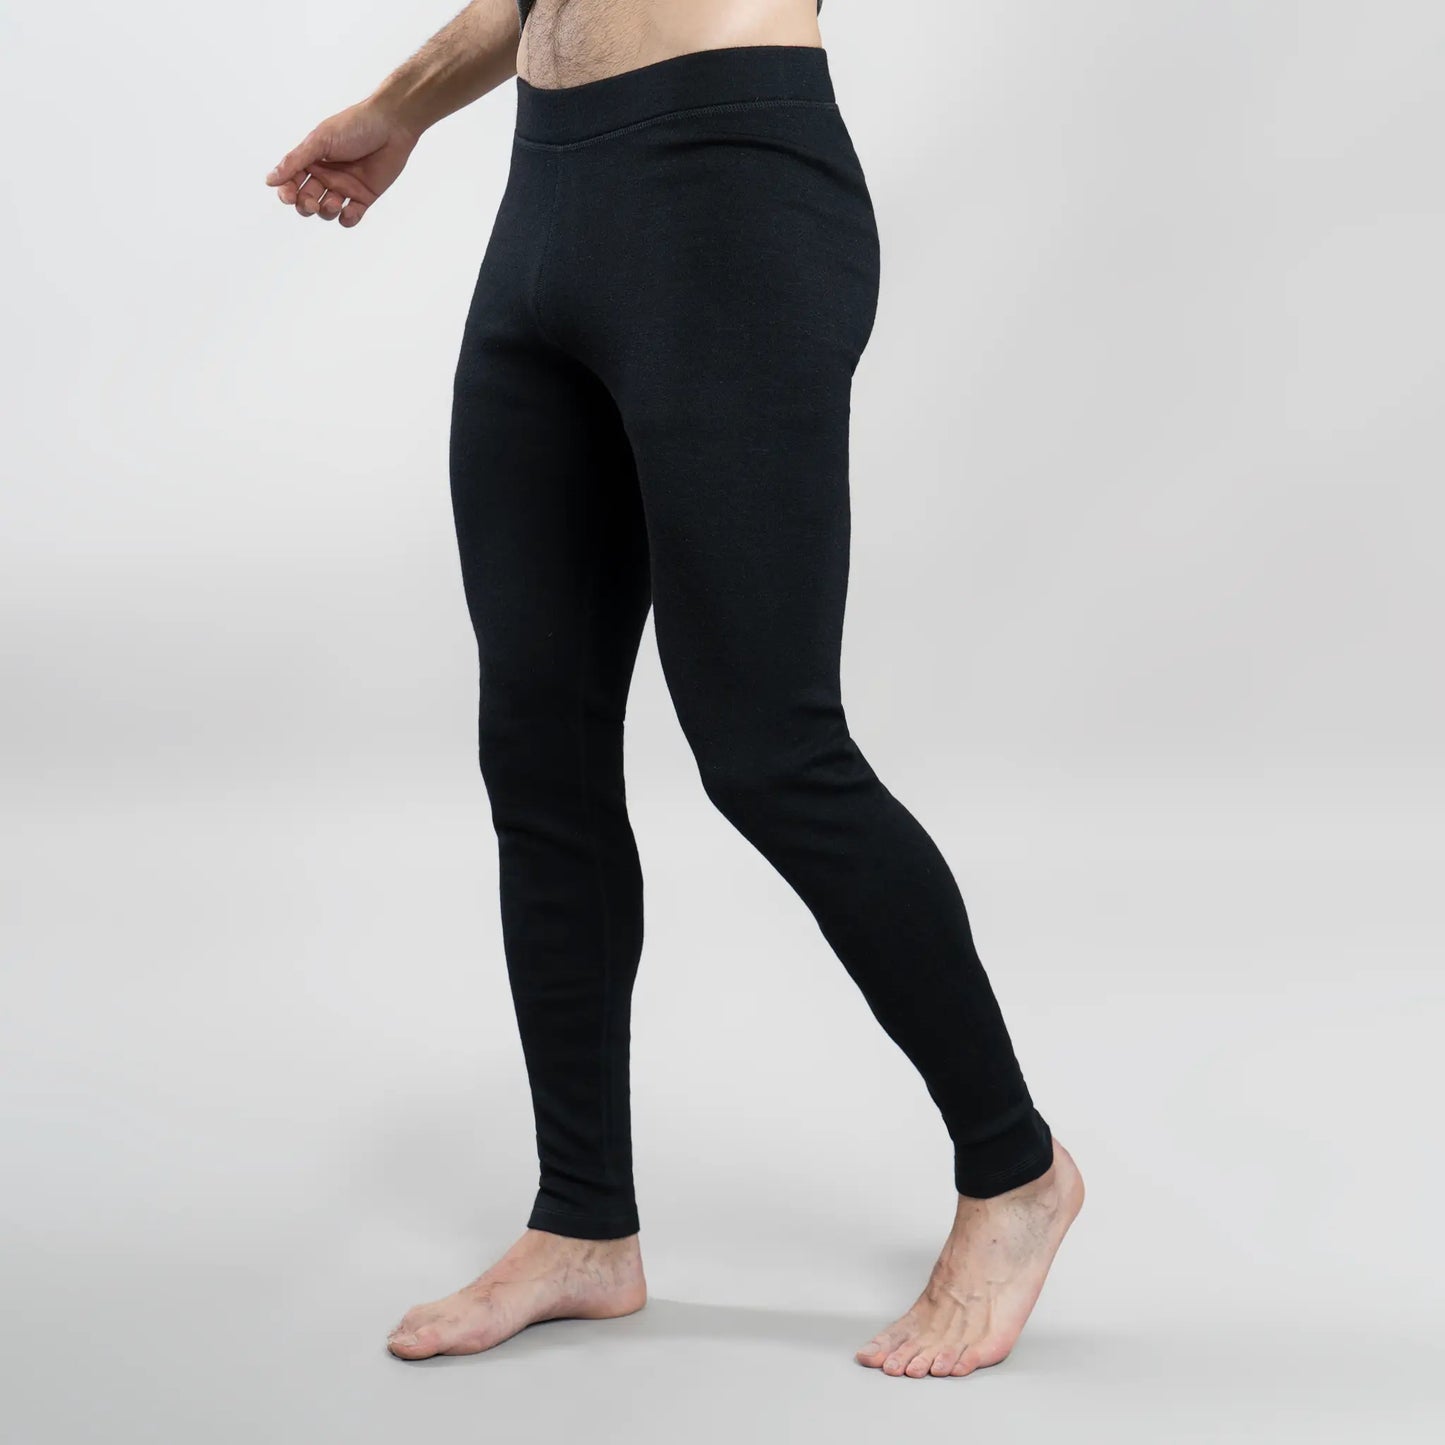 mens sustainable leggings lightweight color black